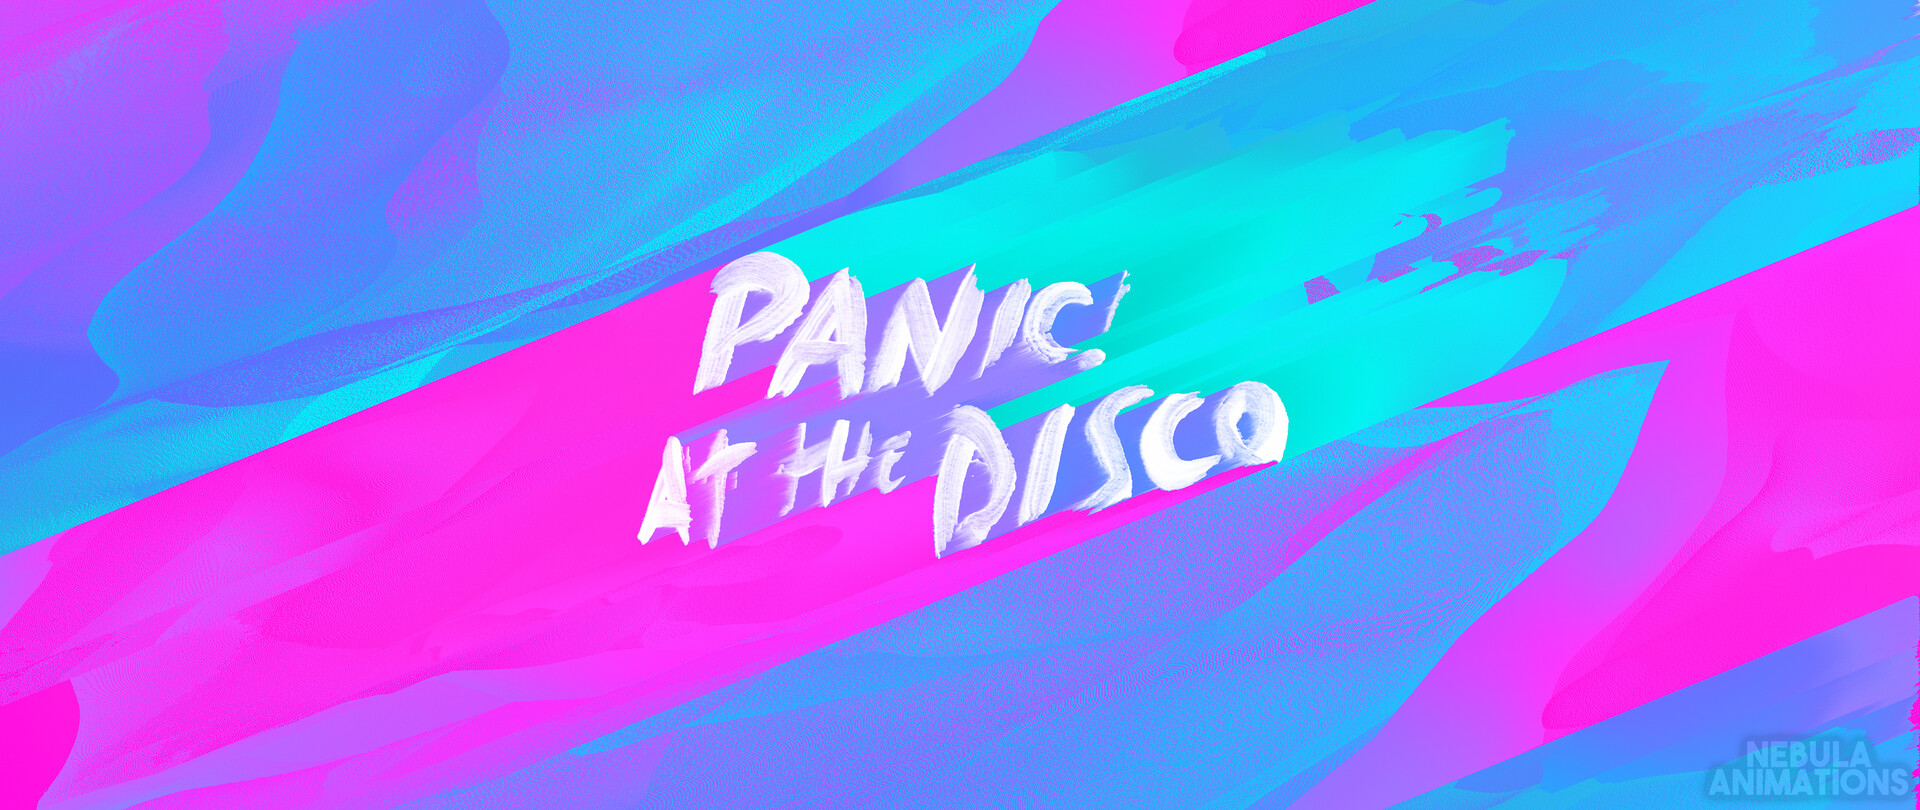 Panic! At The Disco - Glitch Wallpaper